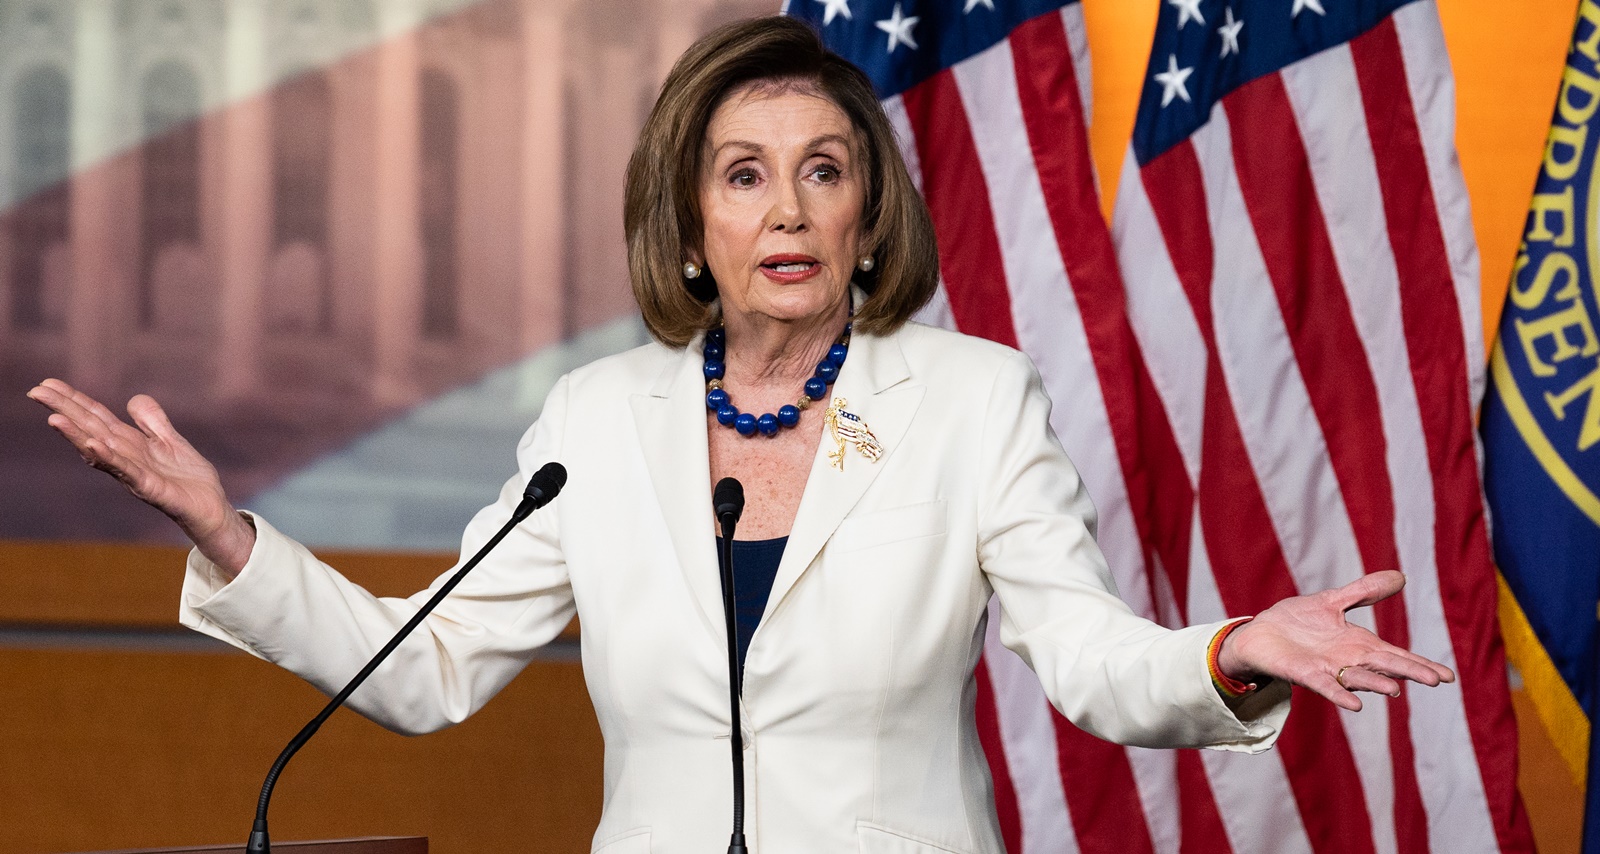 Nancy Pelosi Net Worth 2019: How Rich Is the House Speaker?